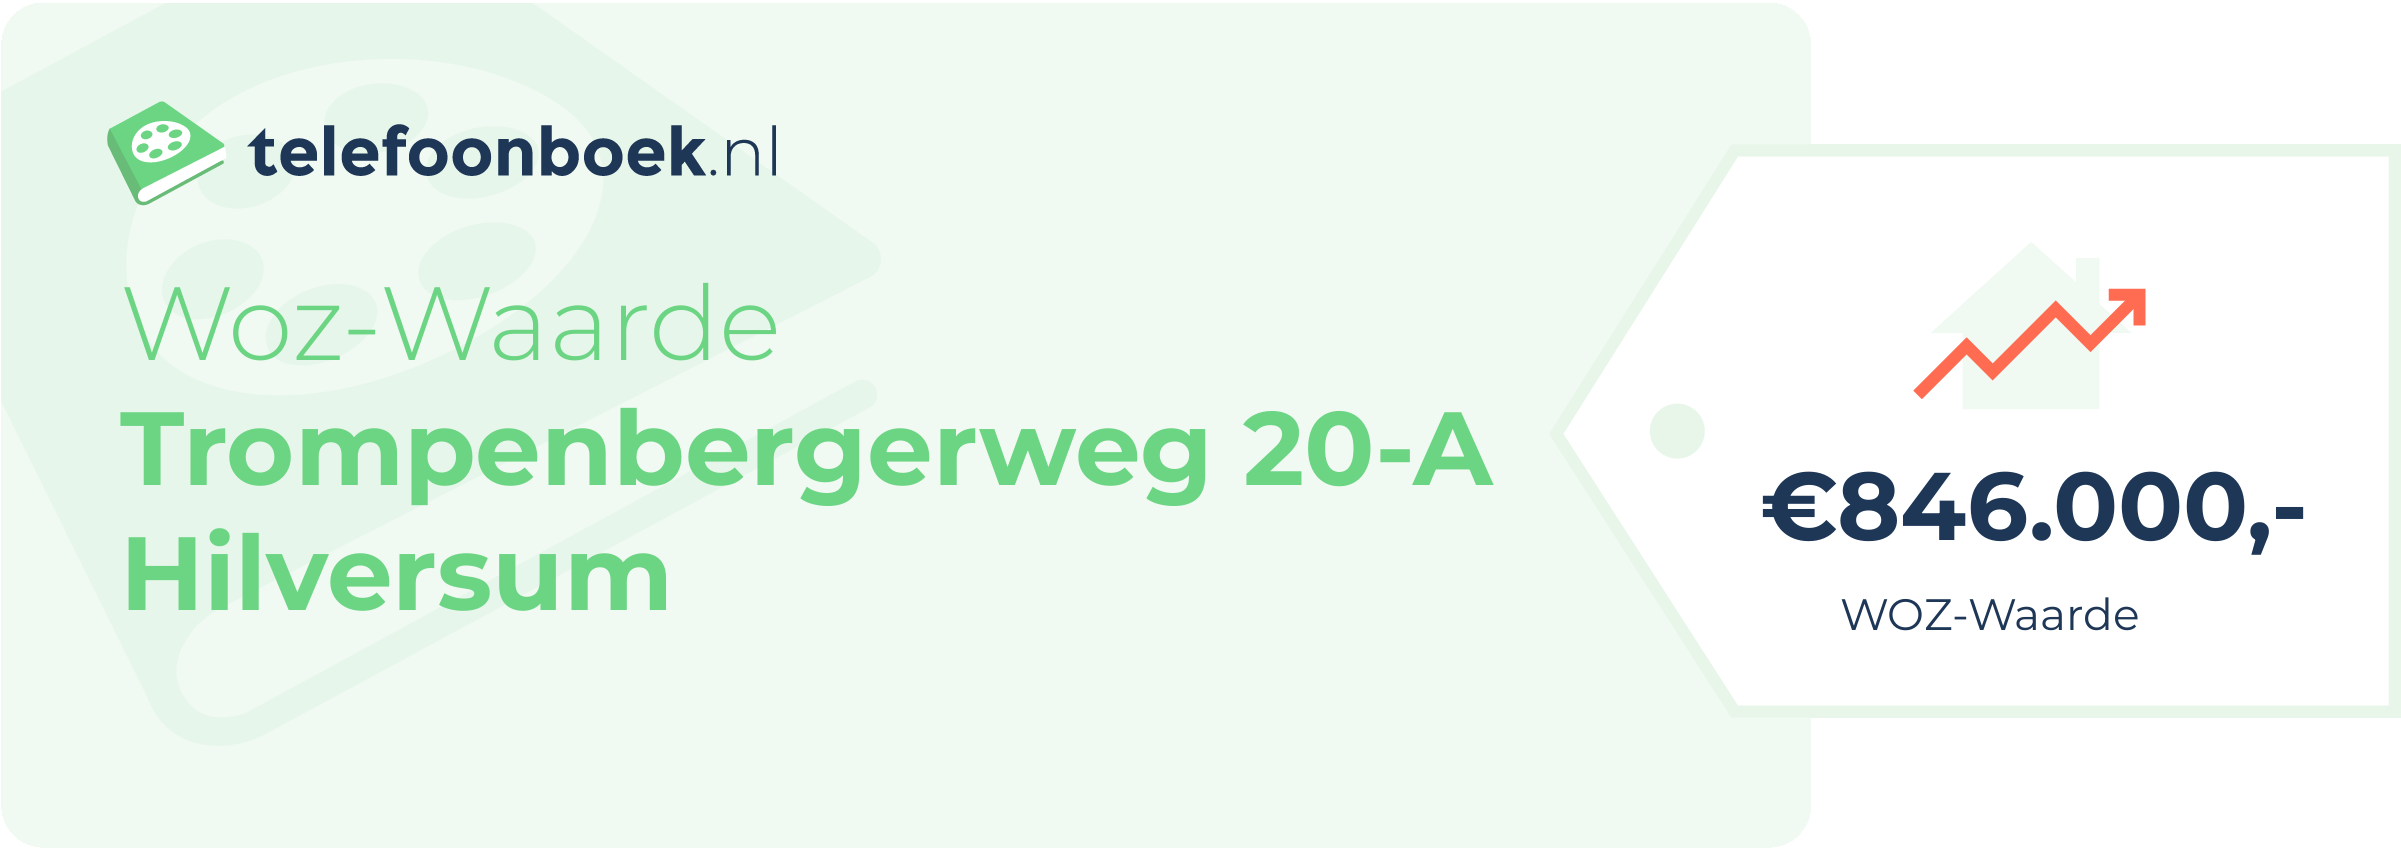 WOZ-waarde Trompenbergerweg 20-A Hilversum